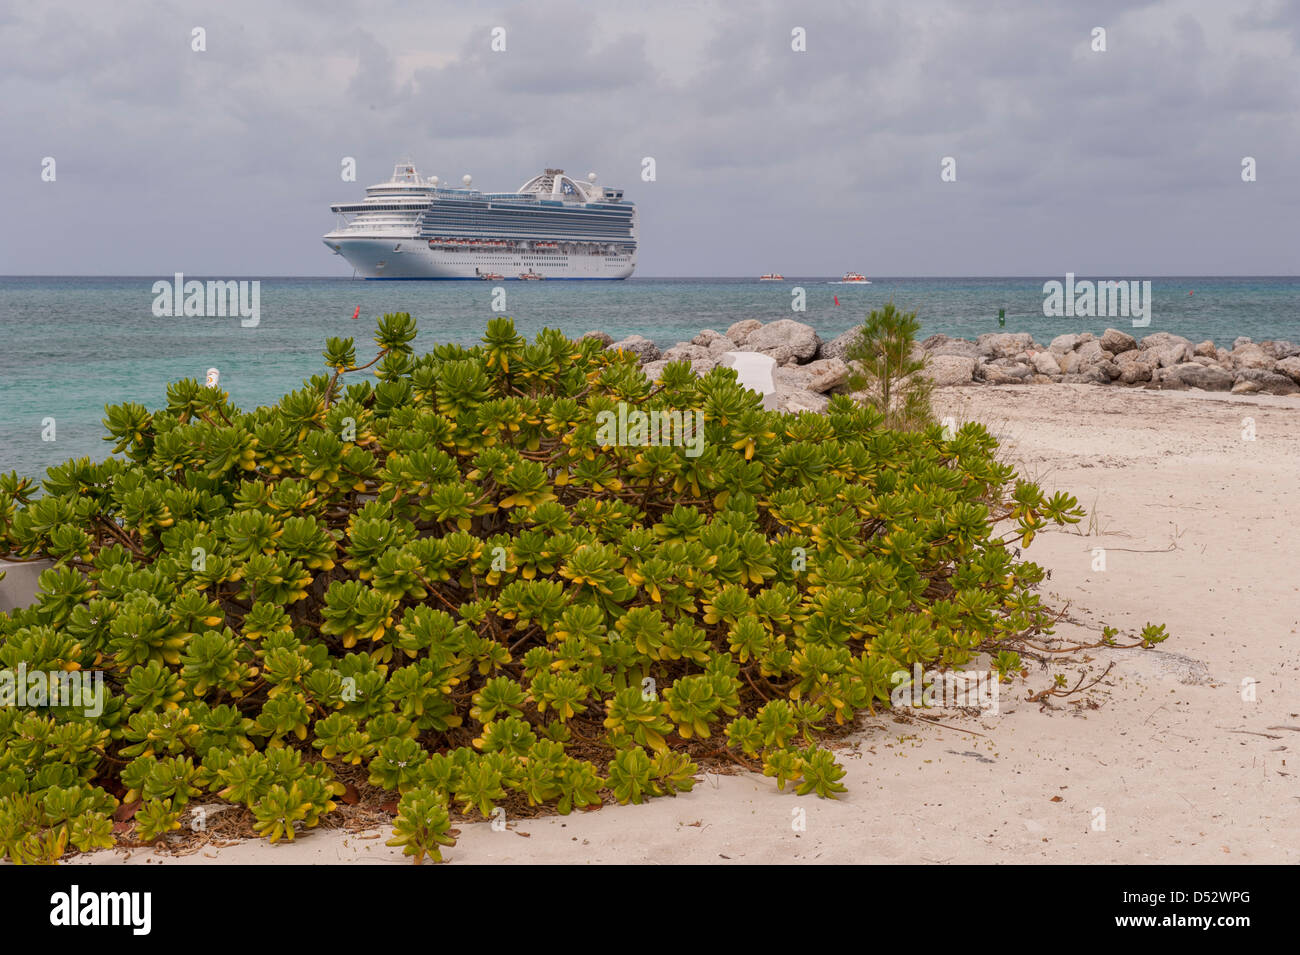 Bahamas, Eleuthera, Princess Cays, Crown Princes, cruise ship Stock Photo